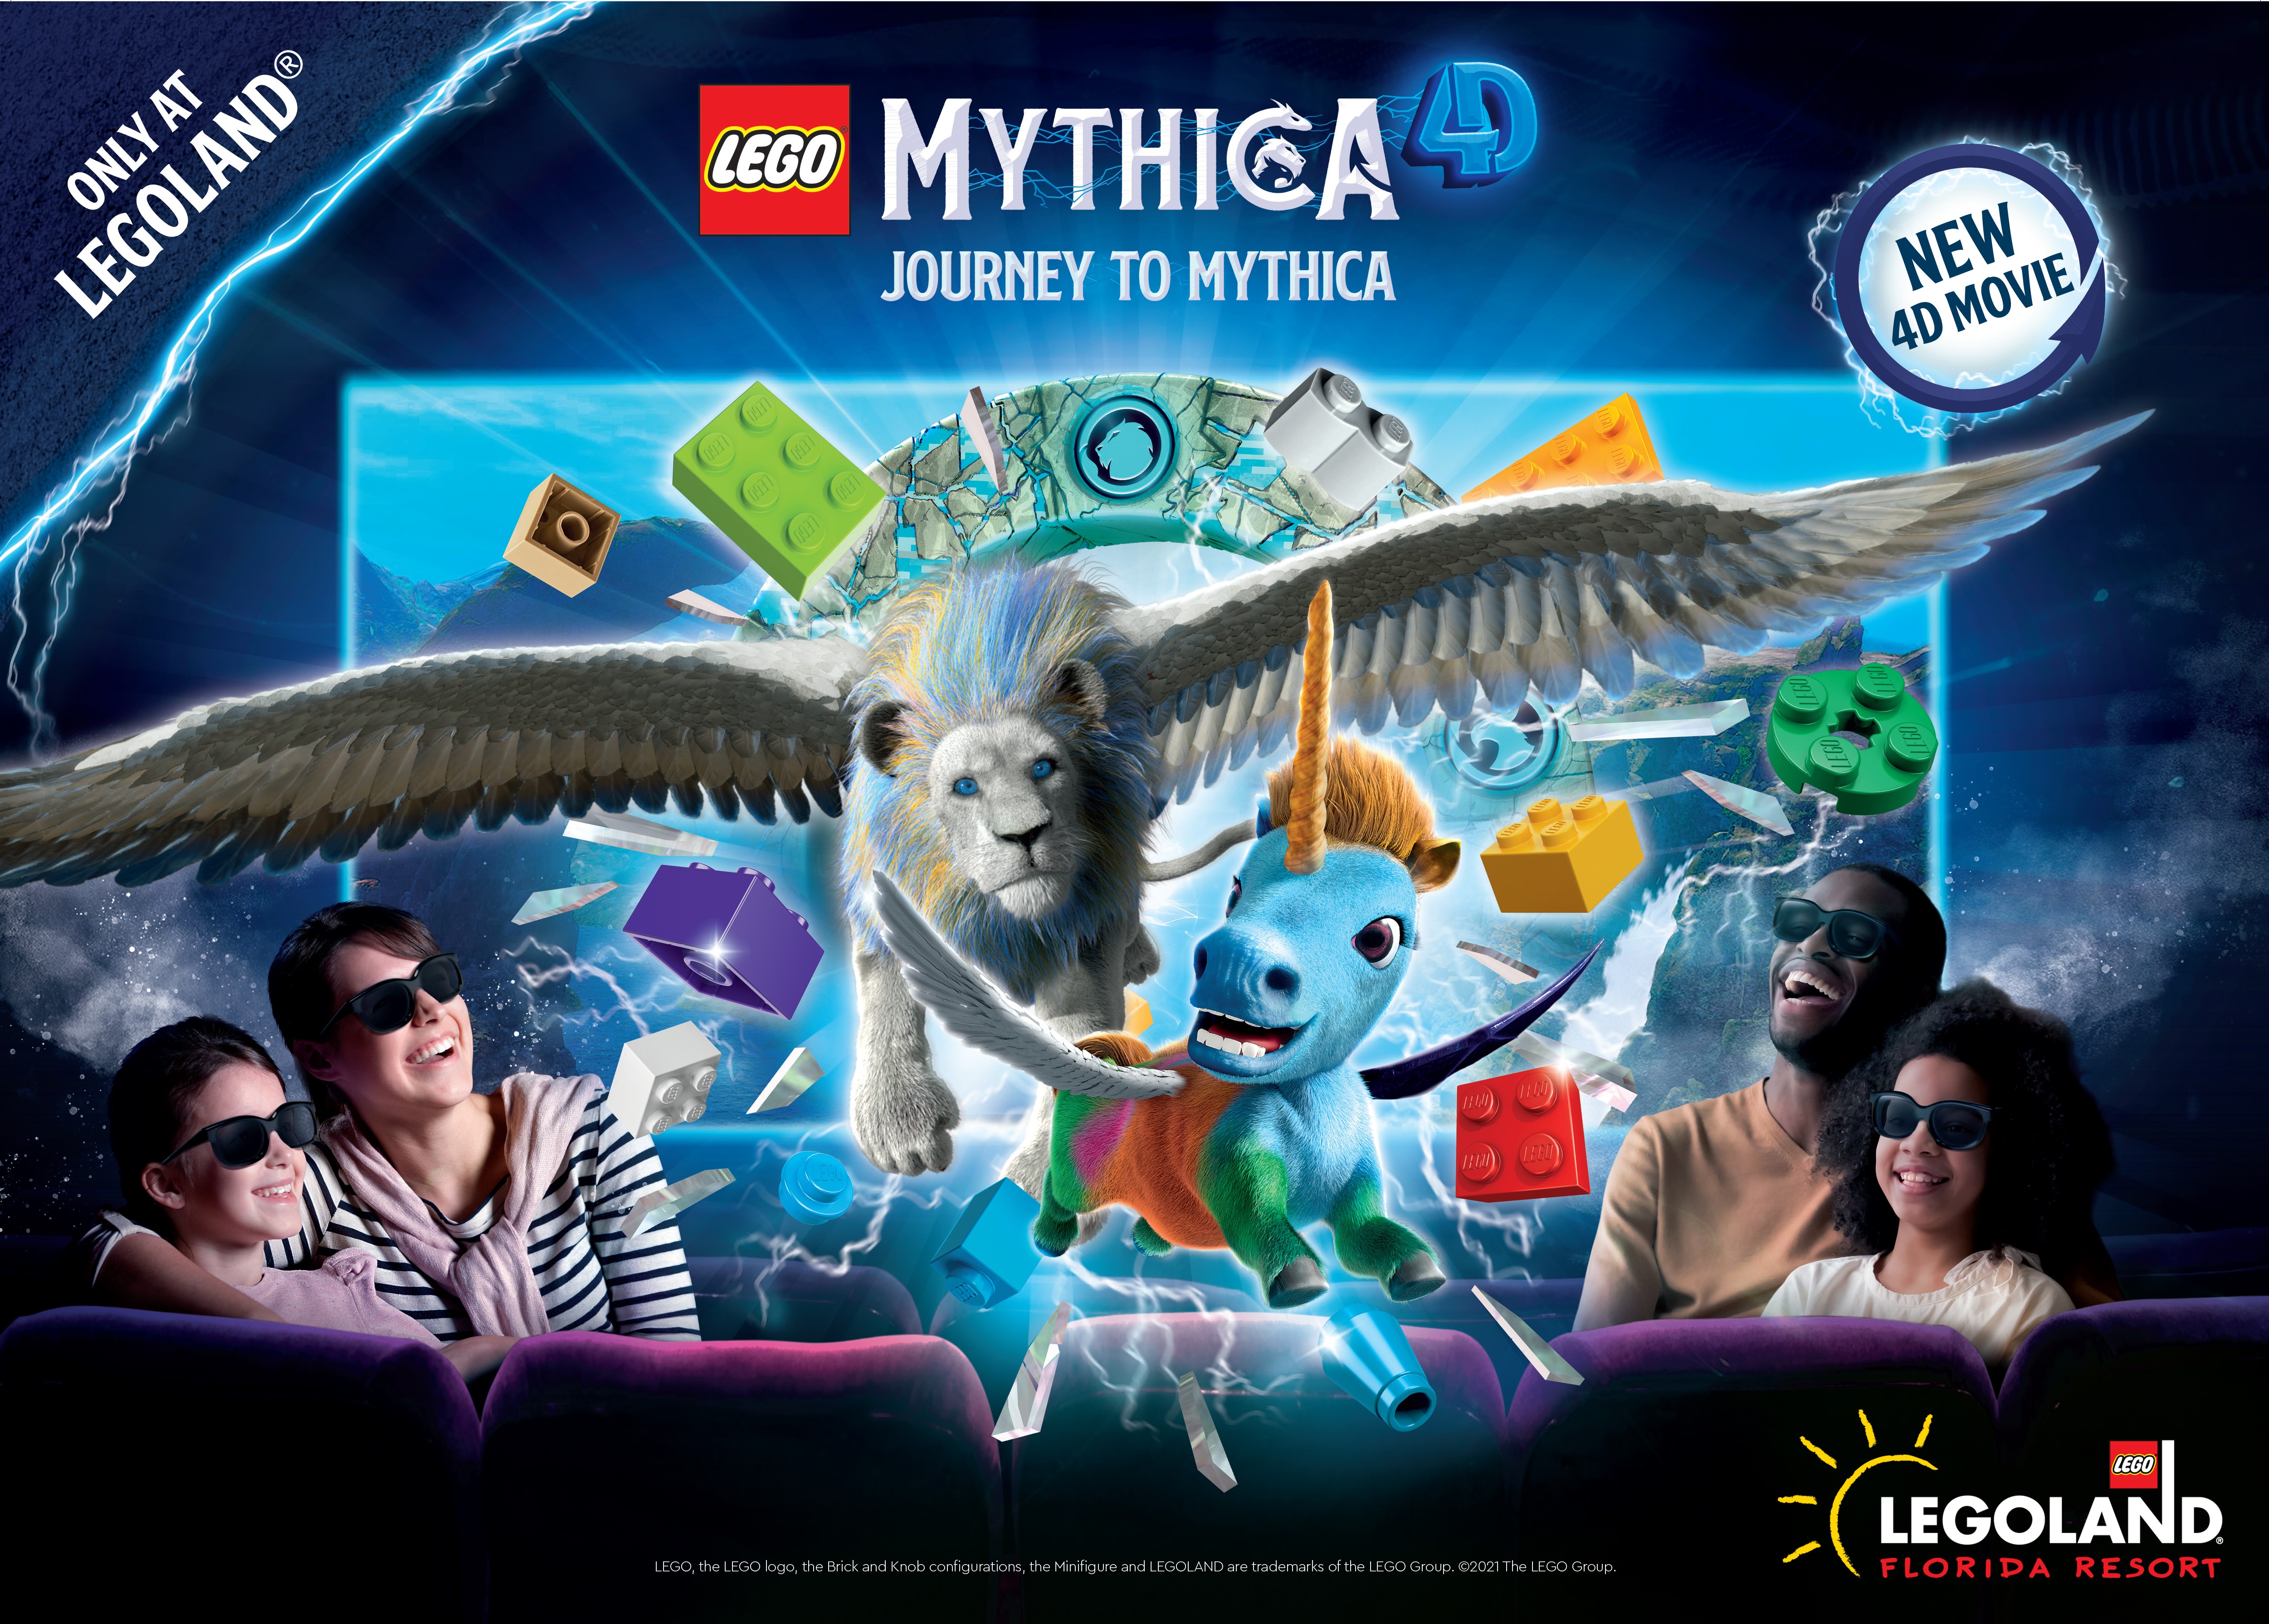 MYTHICA 4D At LEGOLAND Florida Resort